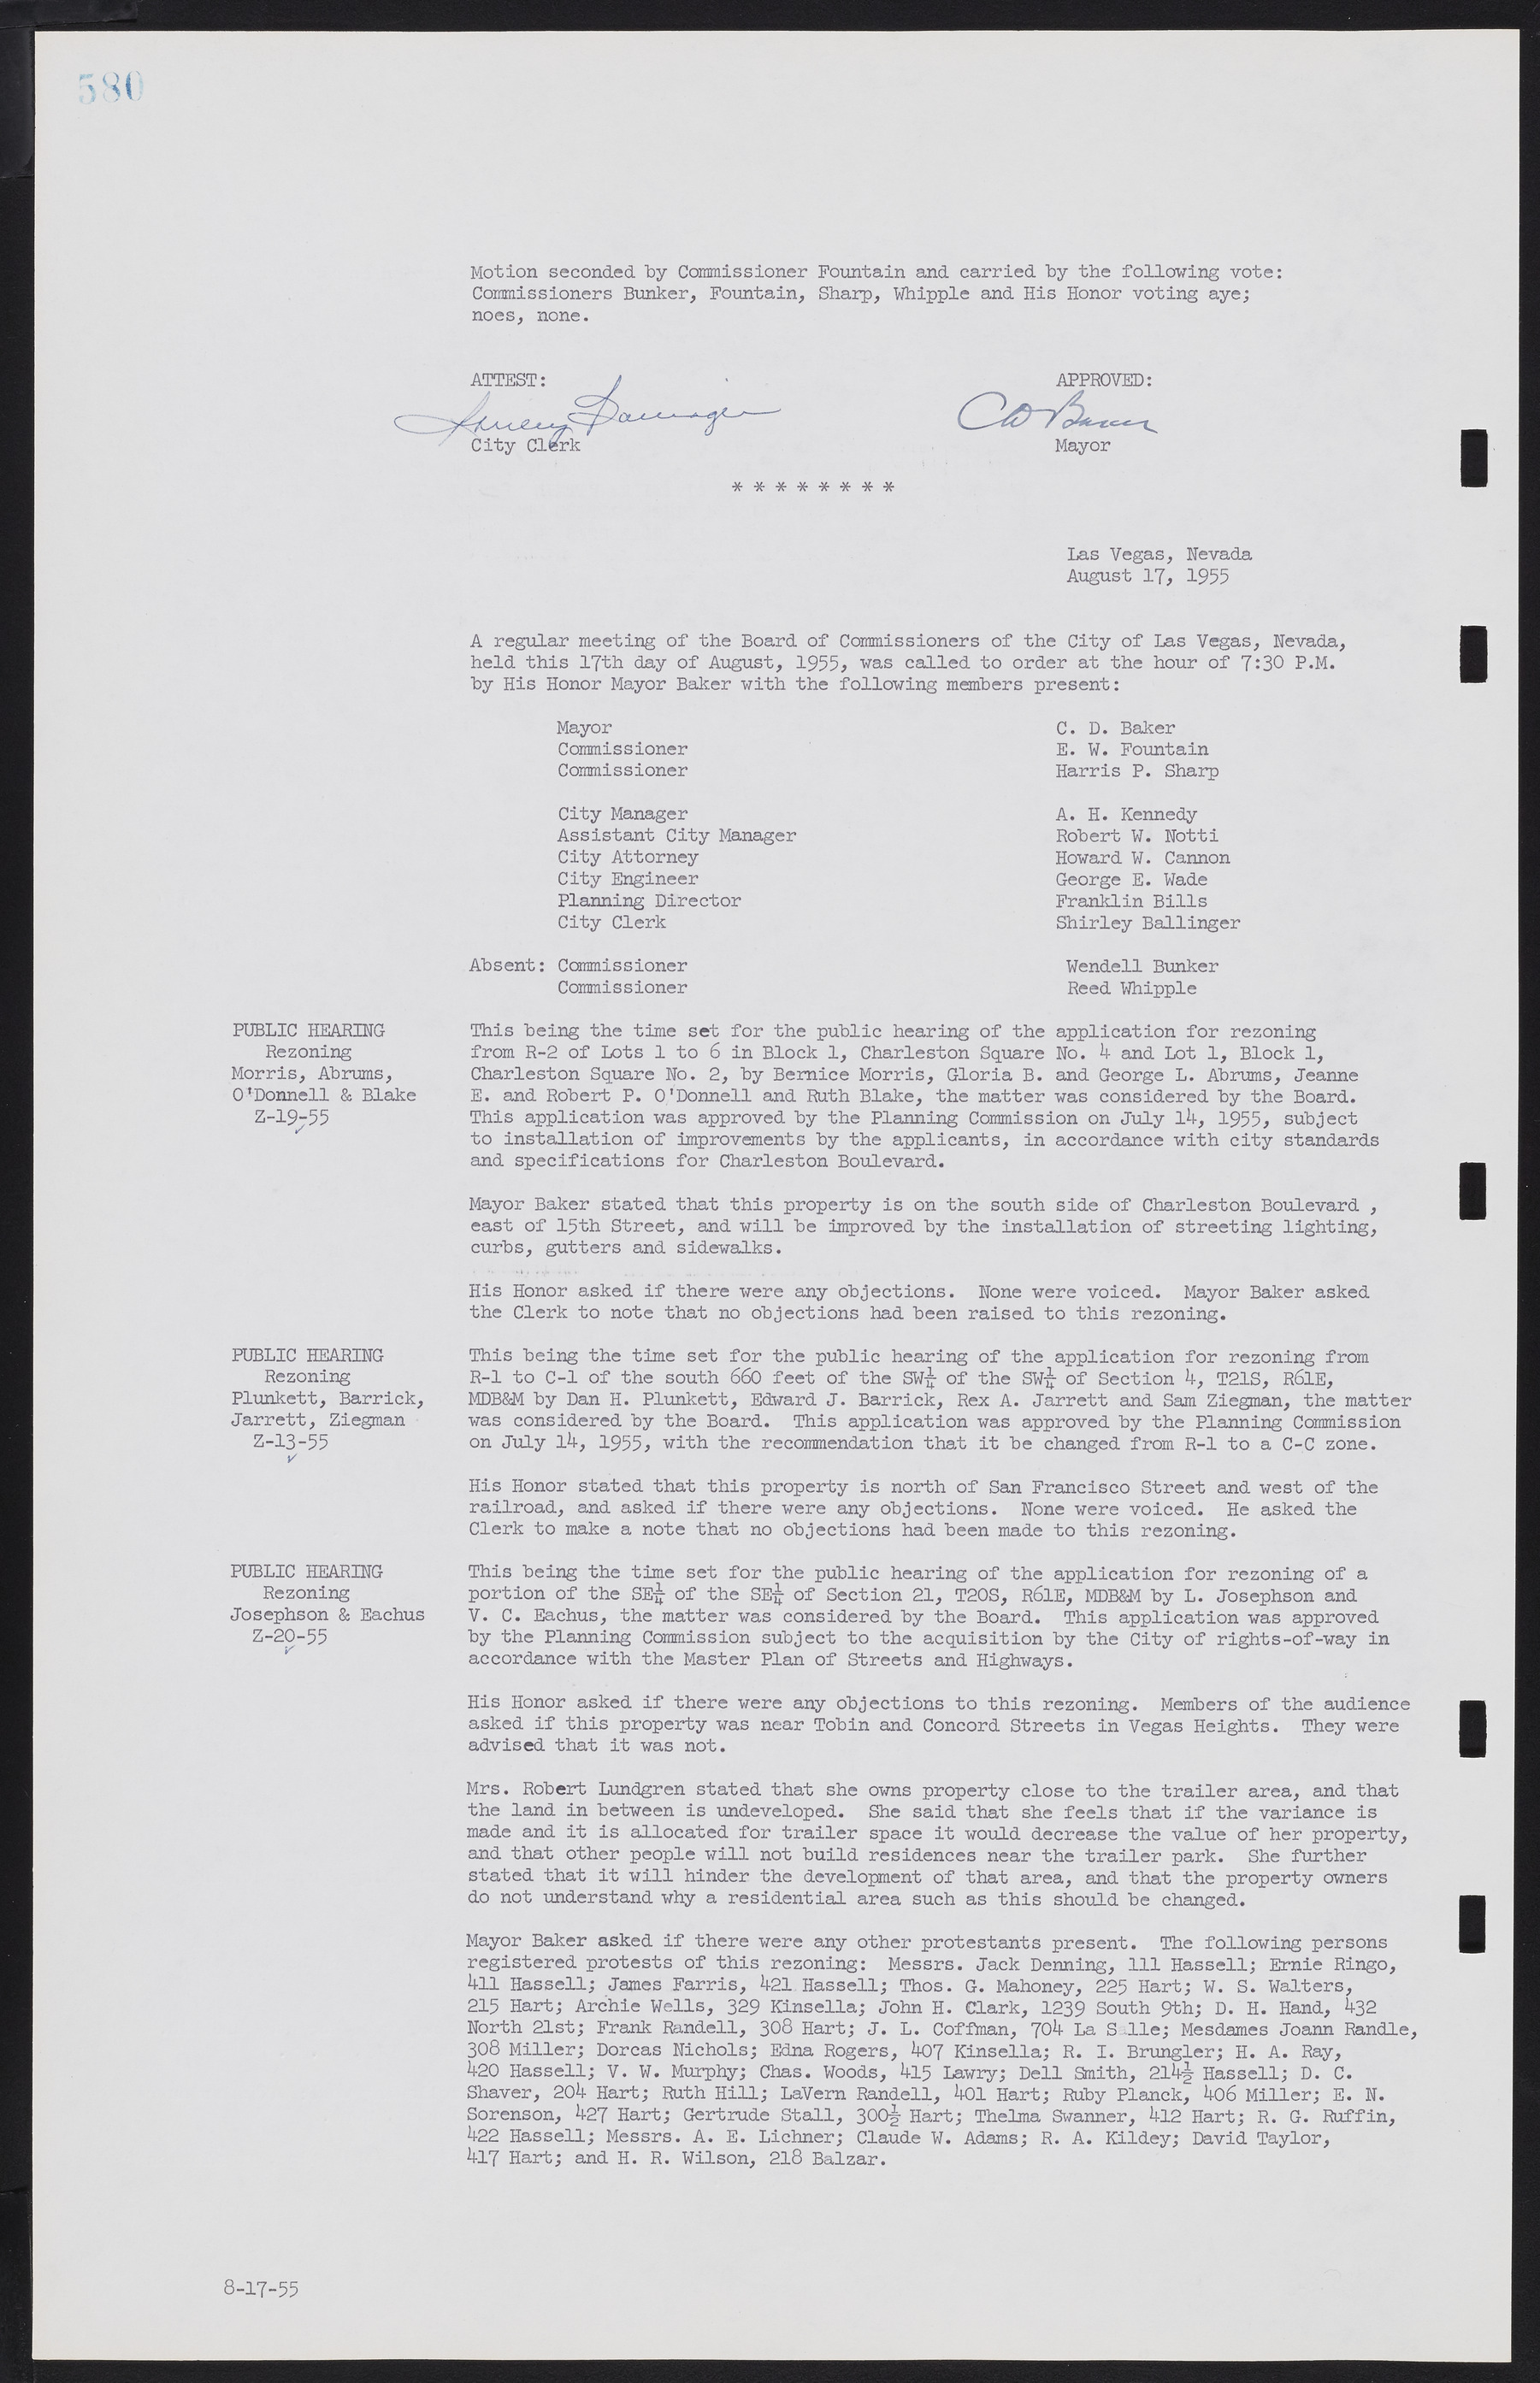 Las Vegas City Commission Minutes, February 17, 1954 to September 21, 1955, lvc000009-586